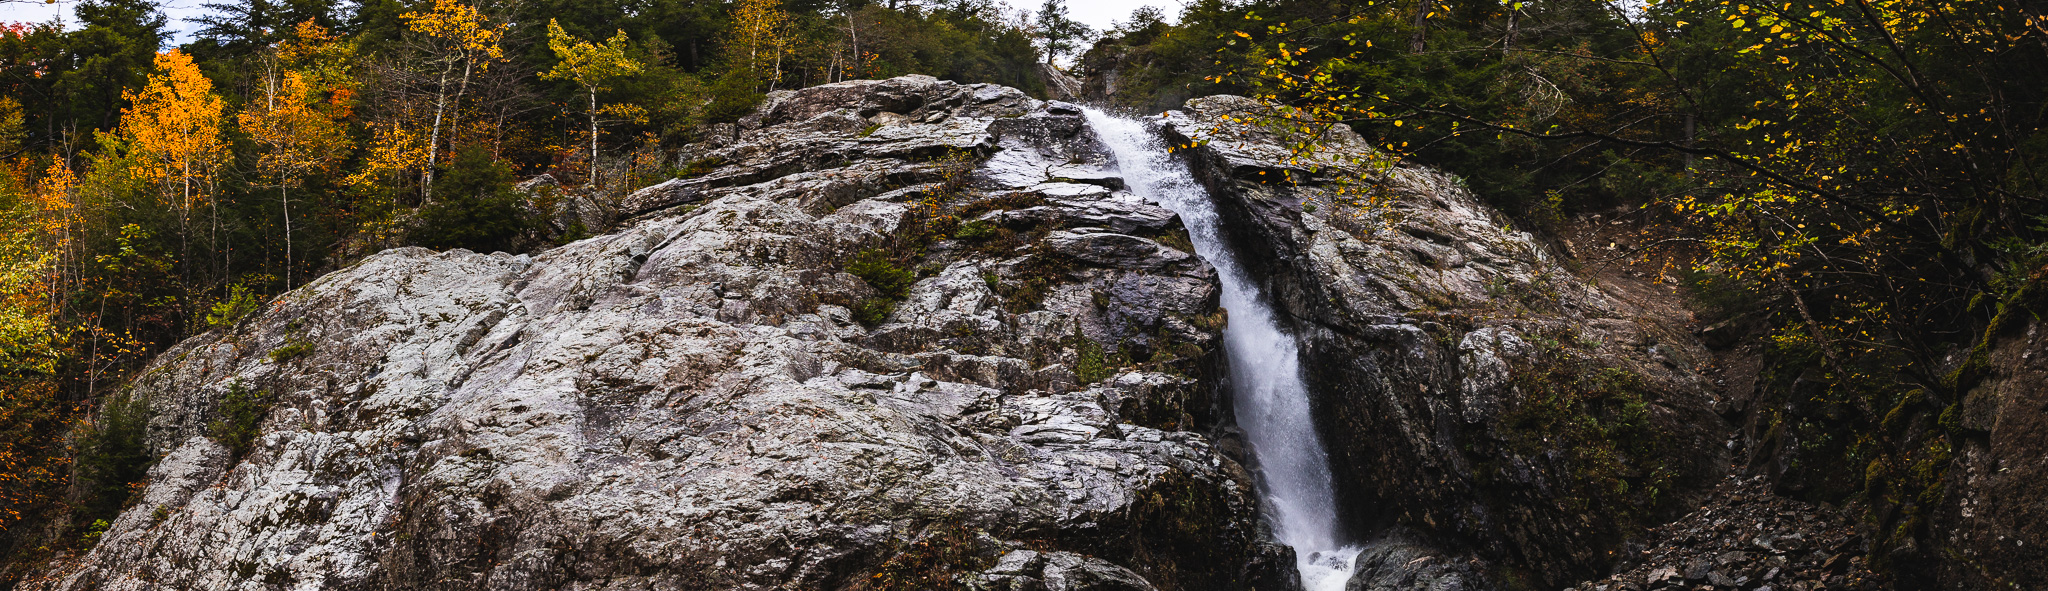 Roaring Brook Falls fall foliage